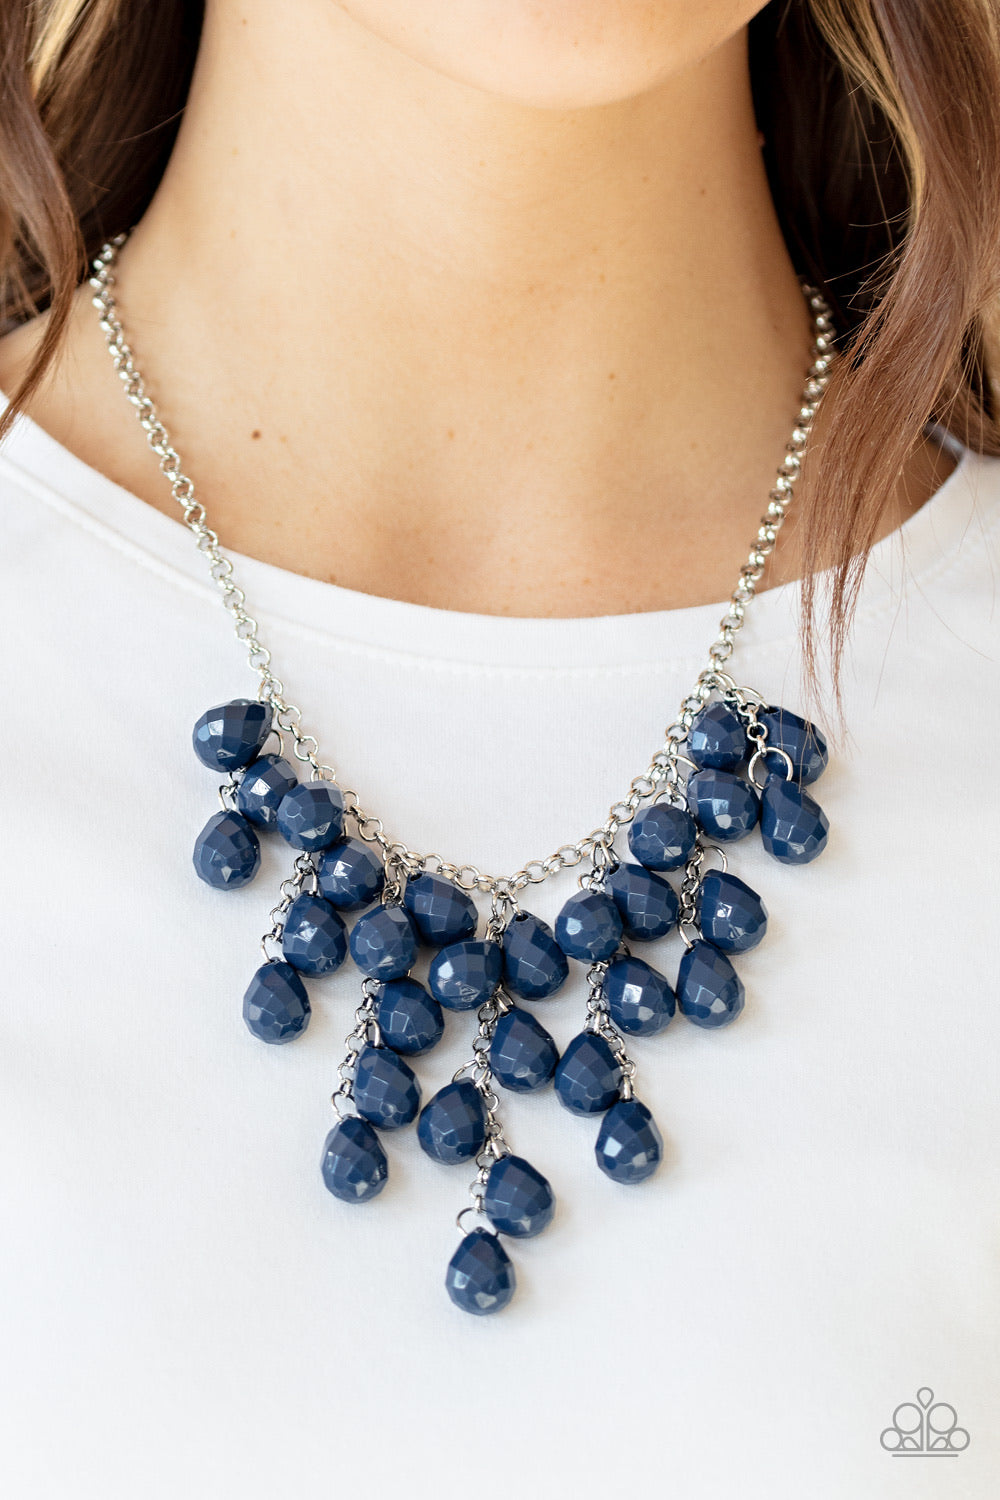 Ever Rebellious Blue Necklace | Paparazzi Accessories | $5.00